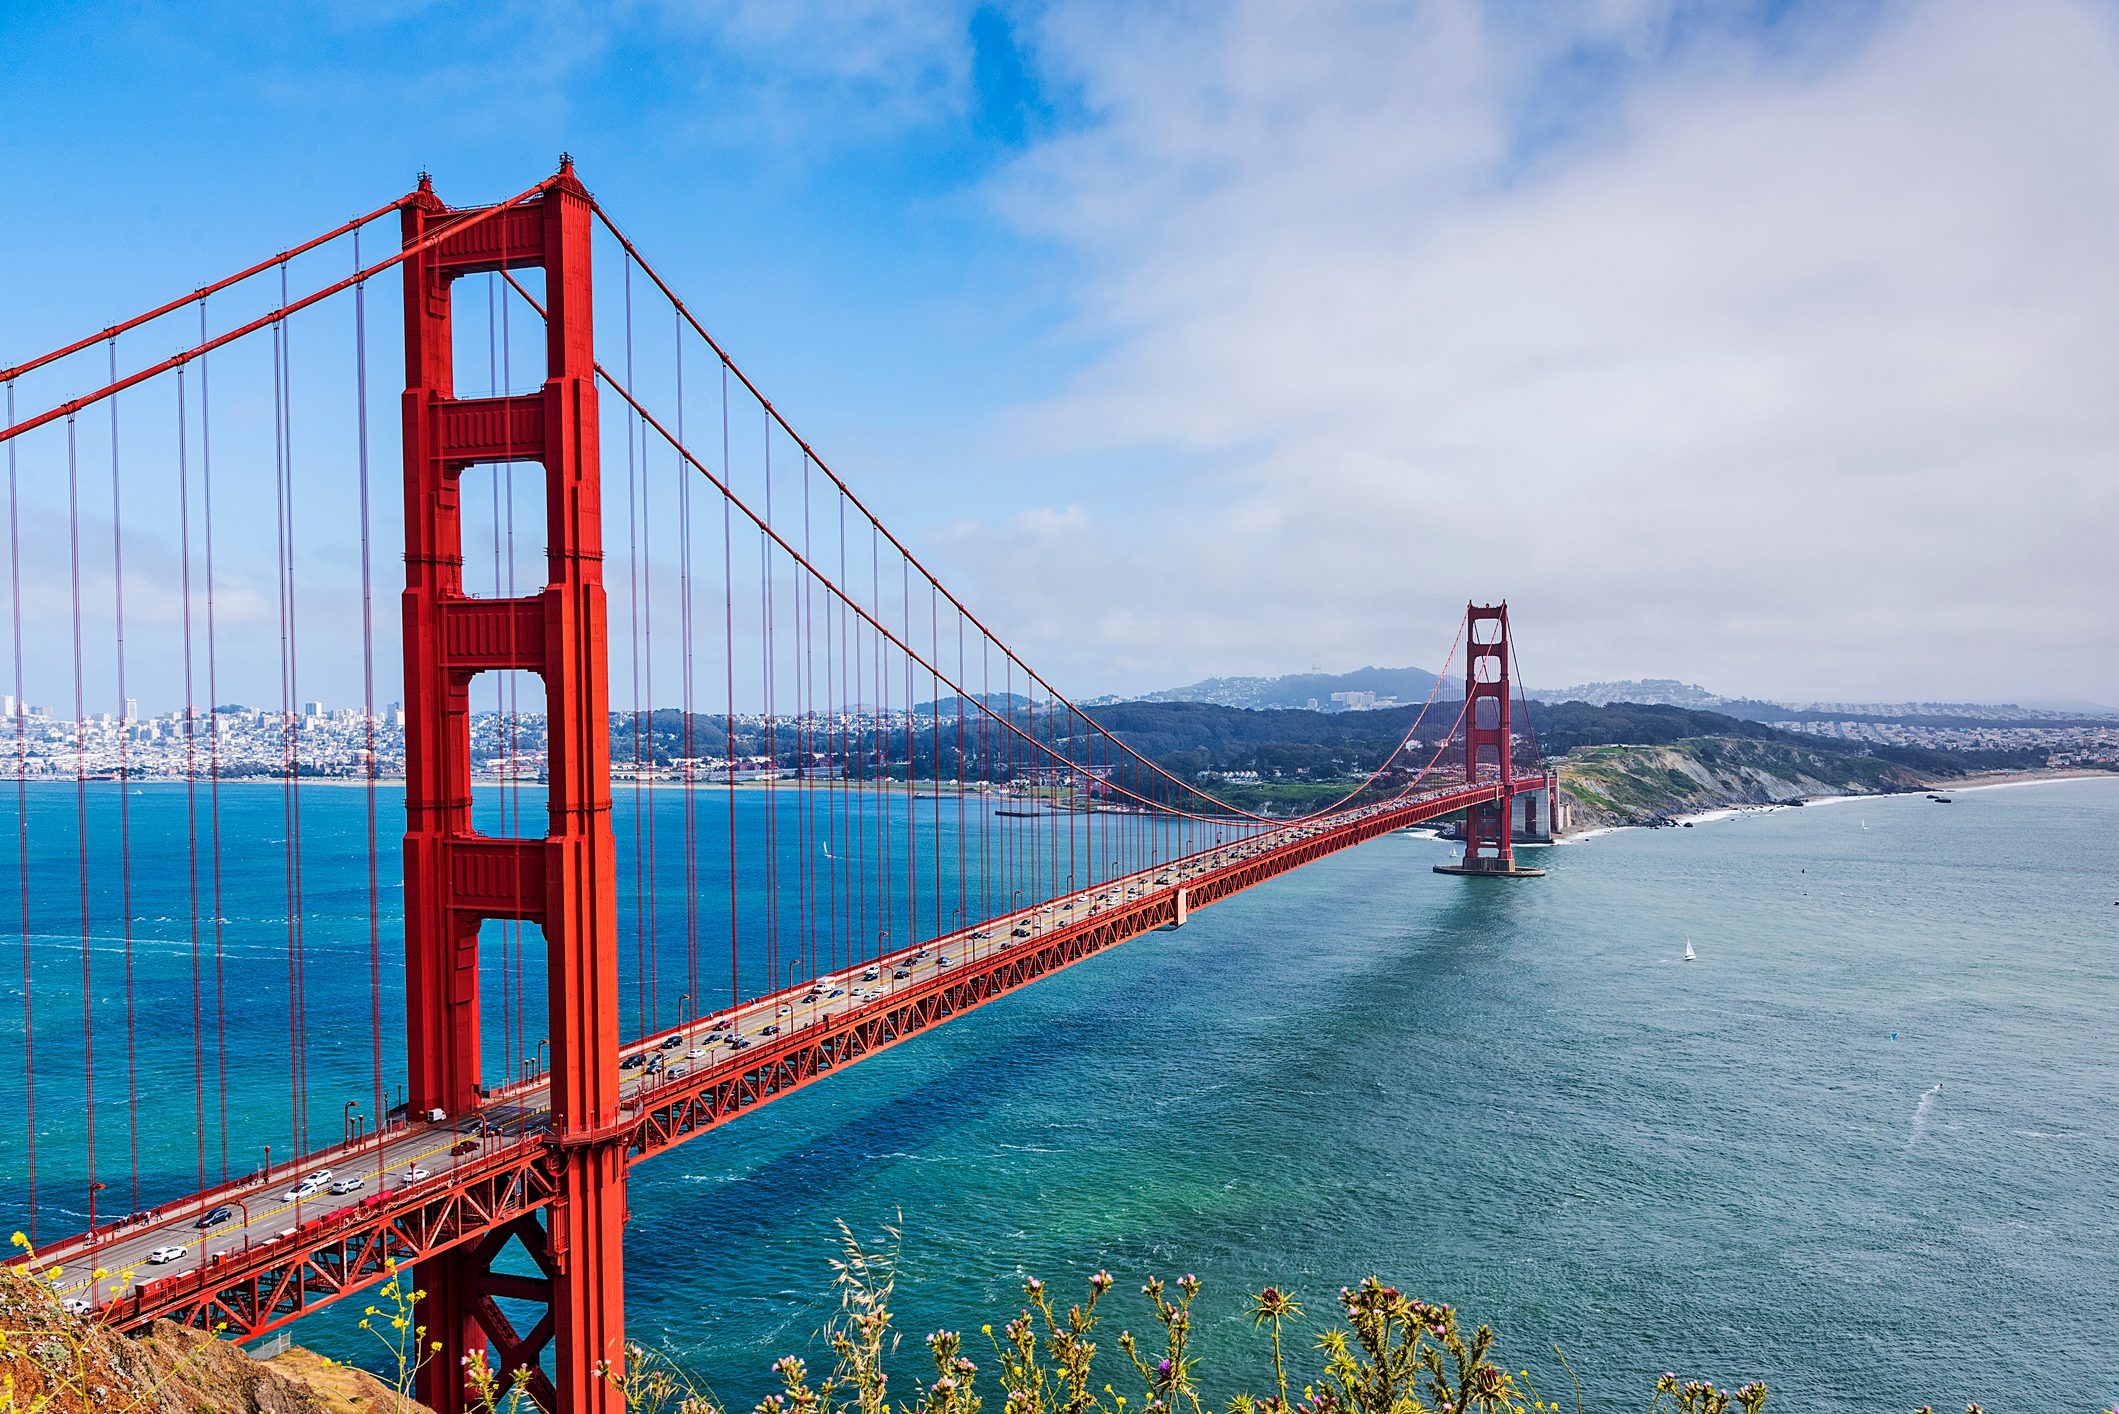 Golden Gate Bridge and the Golden Gate strait, San Francisco, California